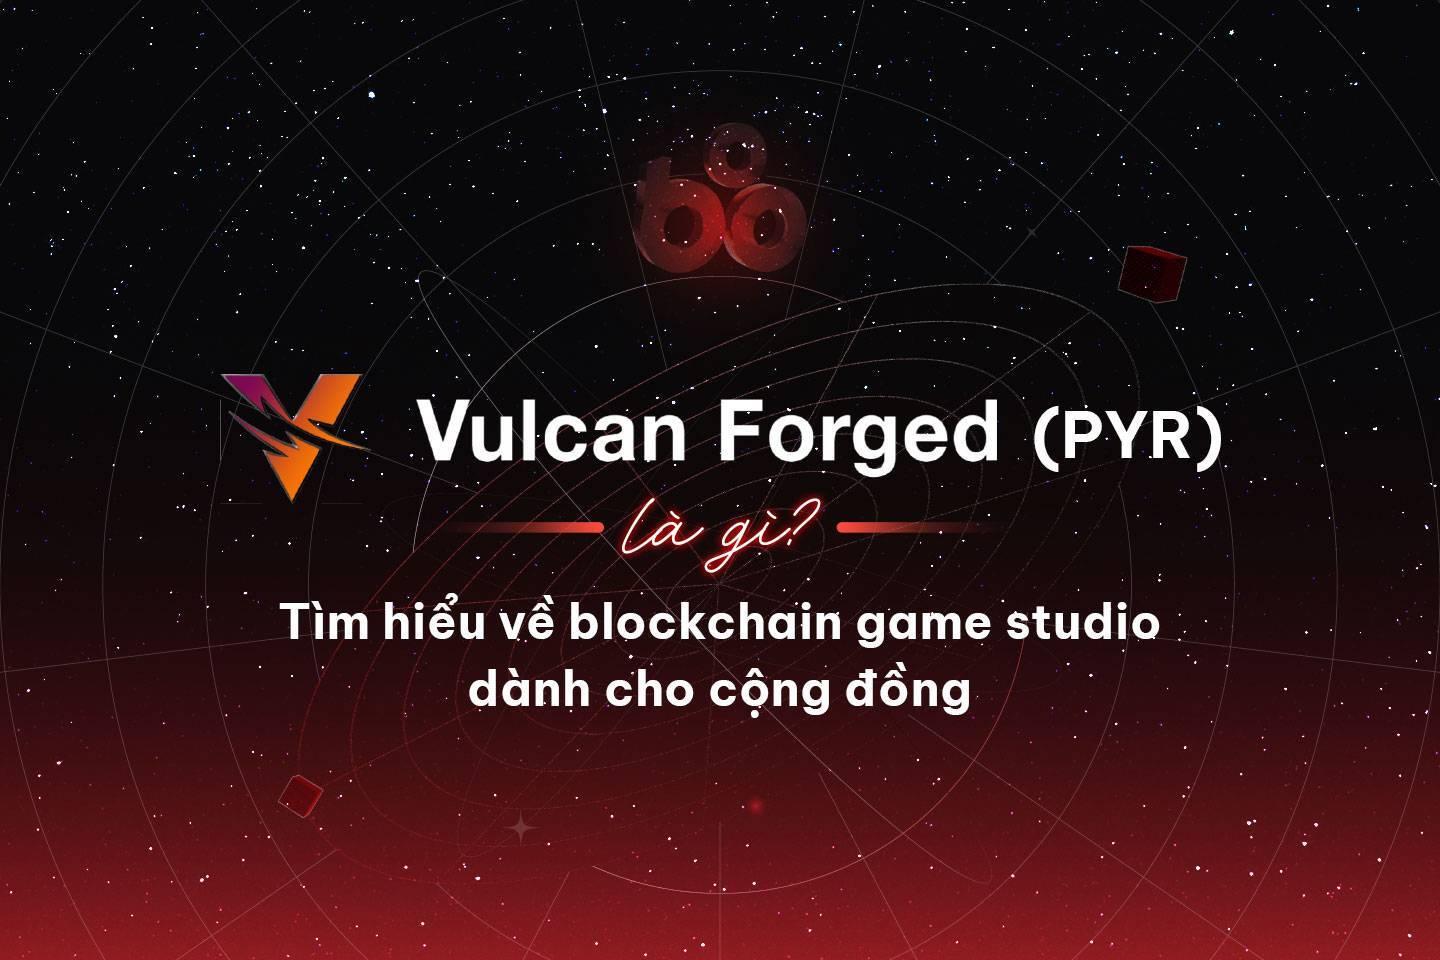 vulcan-forged-pyr-la-gi-tim-hieu-ve-blockchain-game-studio-danh-cho-cong-dong